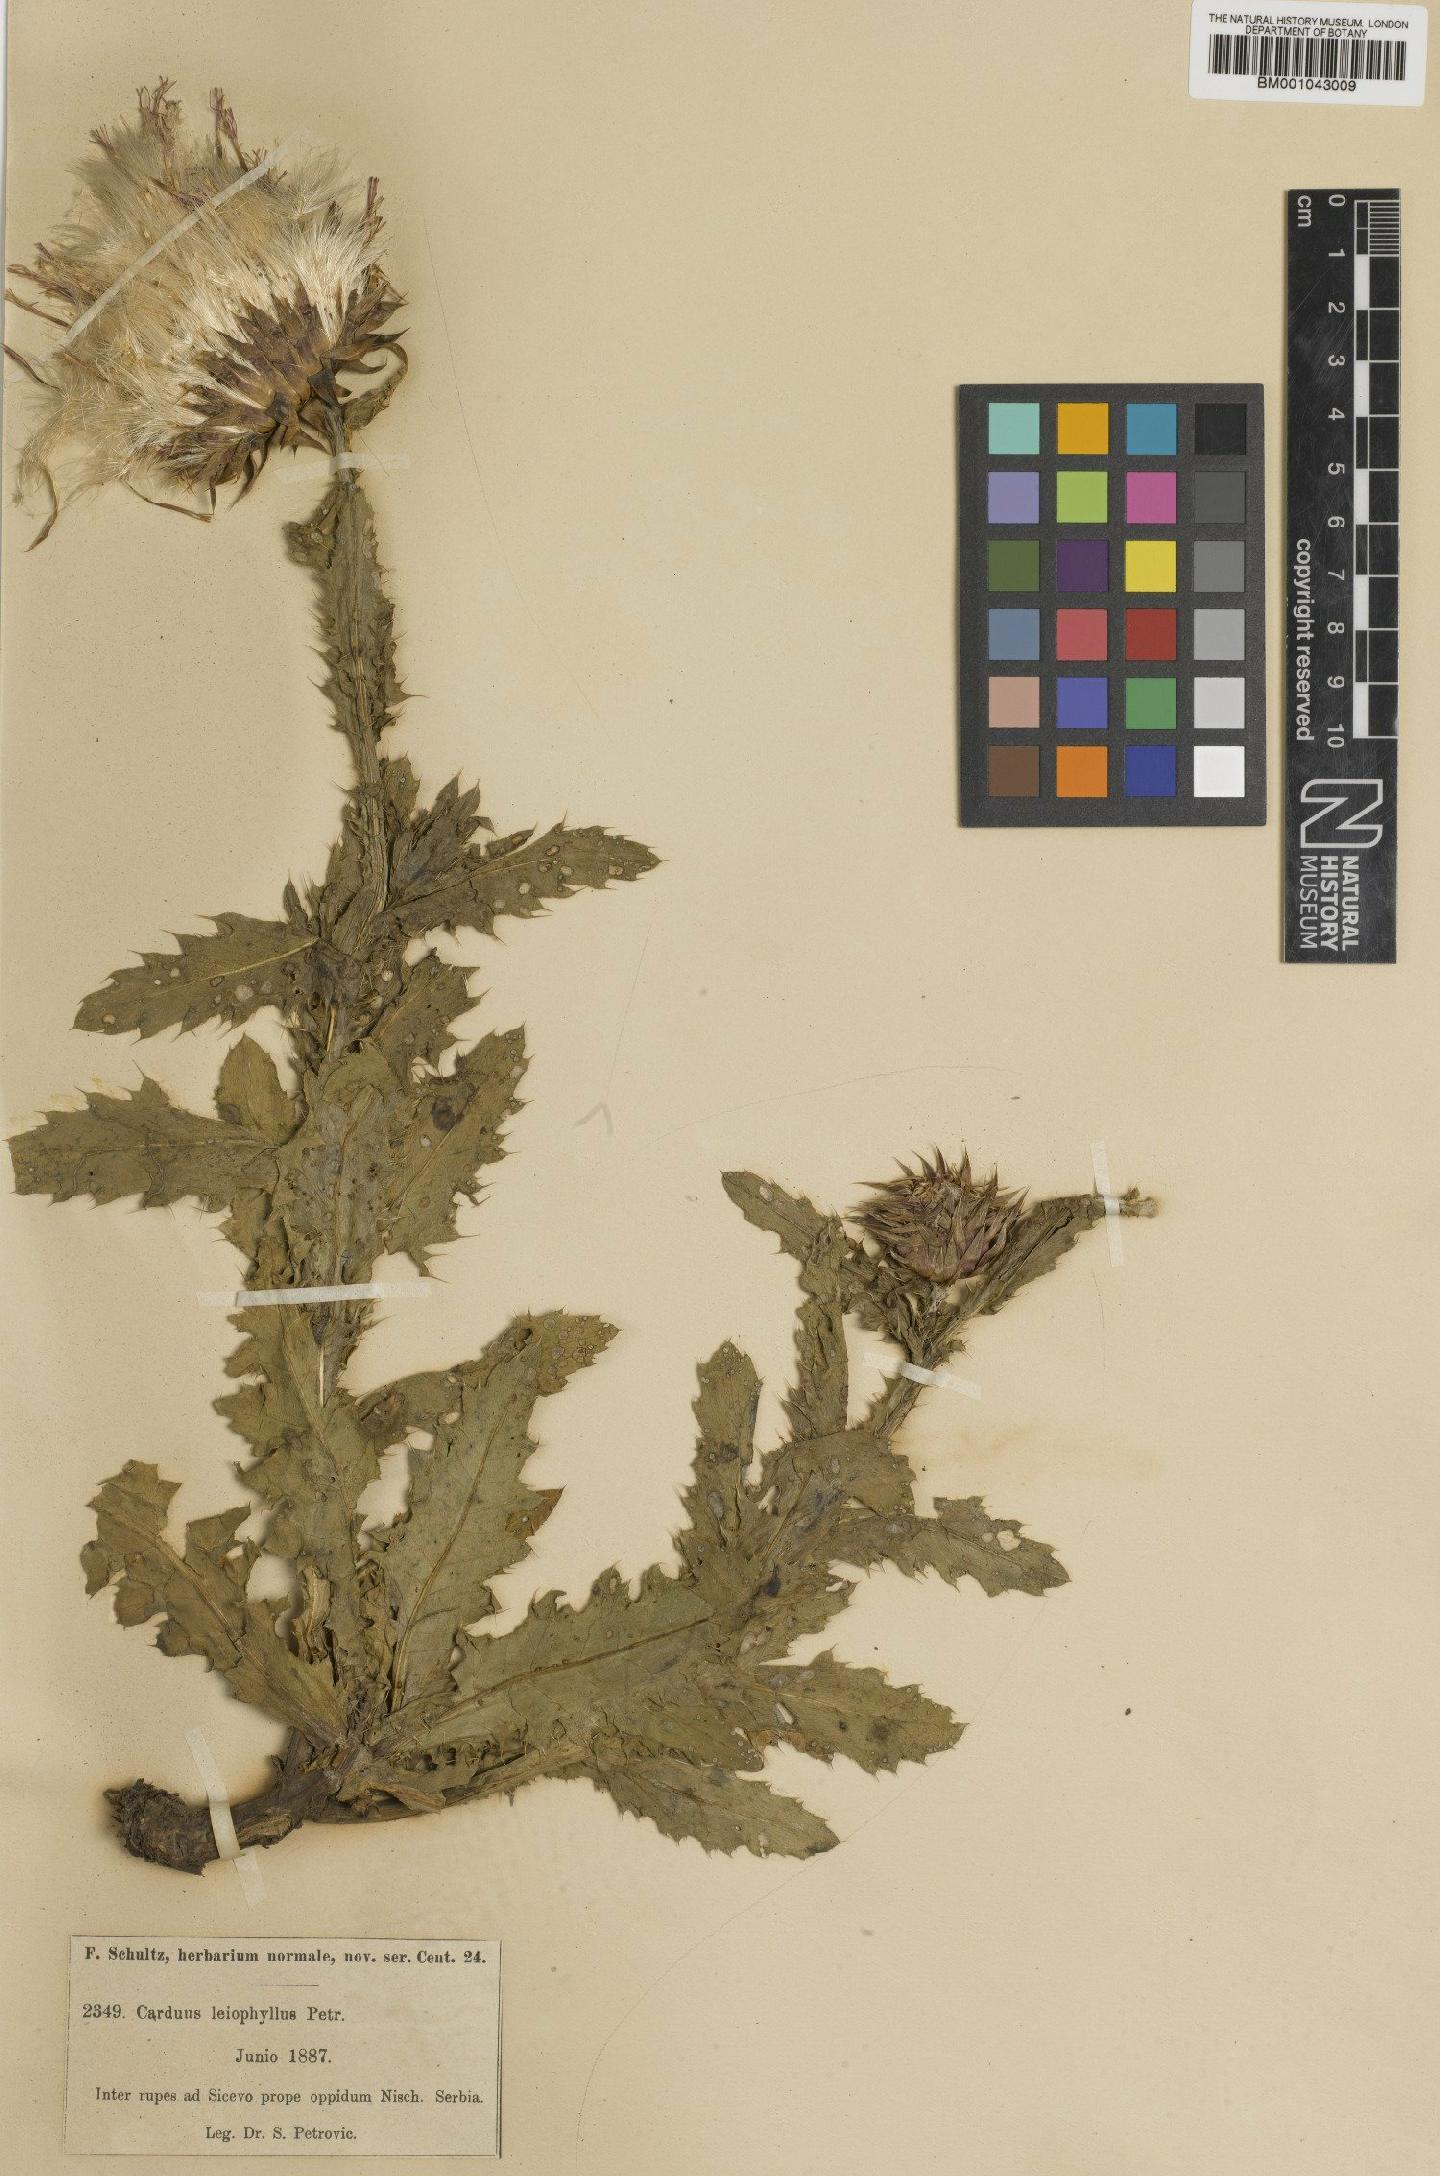 To NHMUK collection (Carduus thoermeri Weinm.; Type; NHMUK:ecatalogue:1954325)